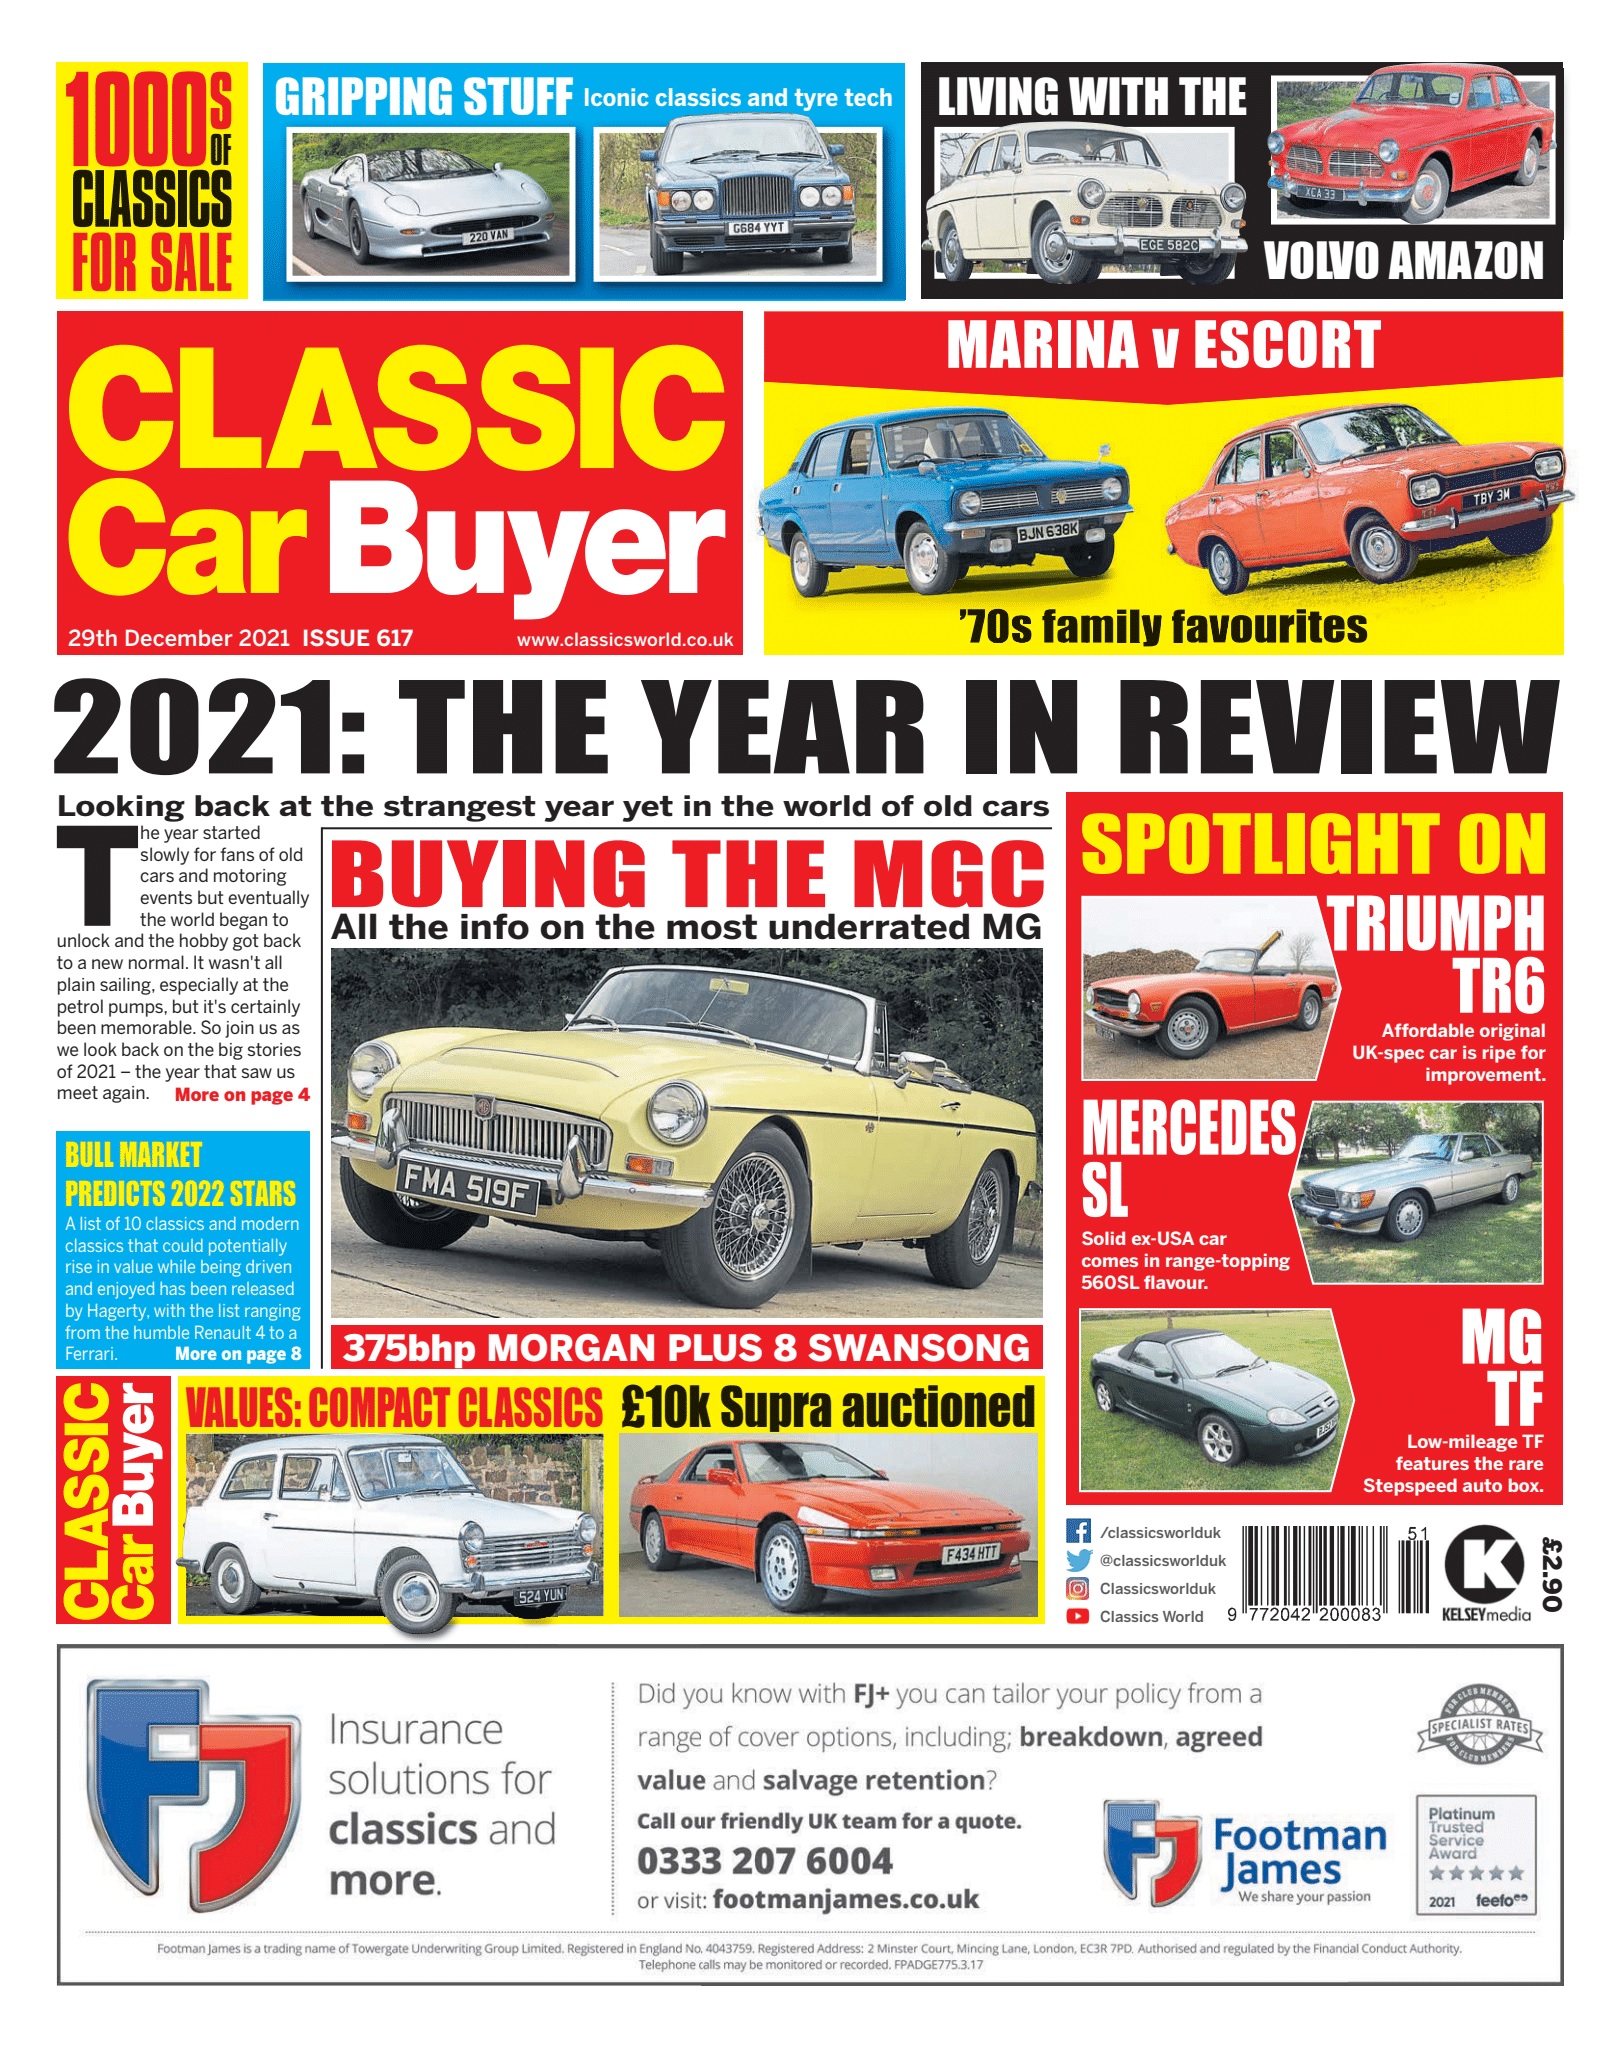 Classic Car Buyer #617 29th December 2021